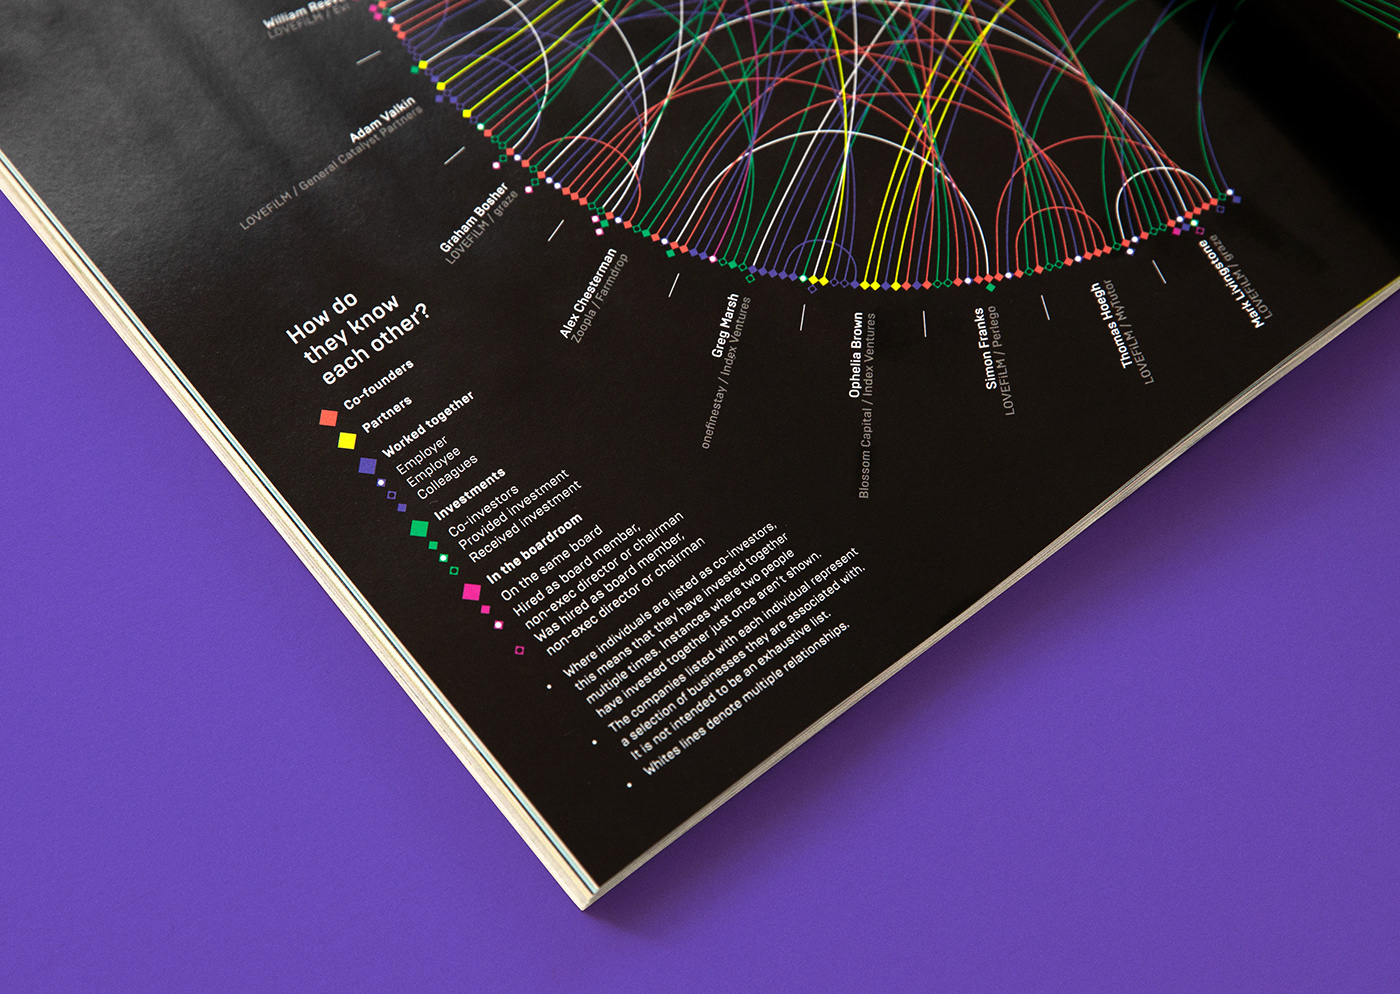 Wired Data Viz data visualisation data visualization infographic Technology editorial network connection magazine